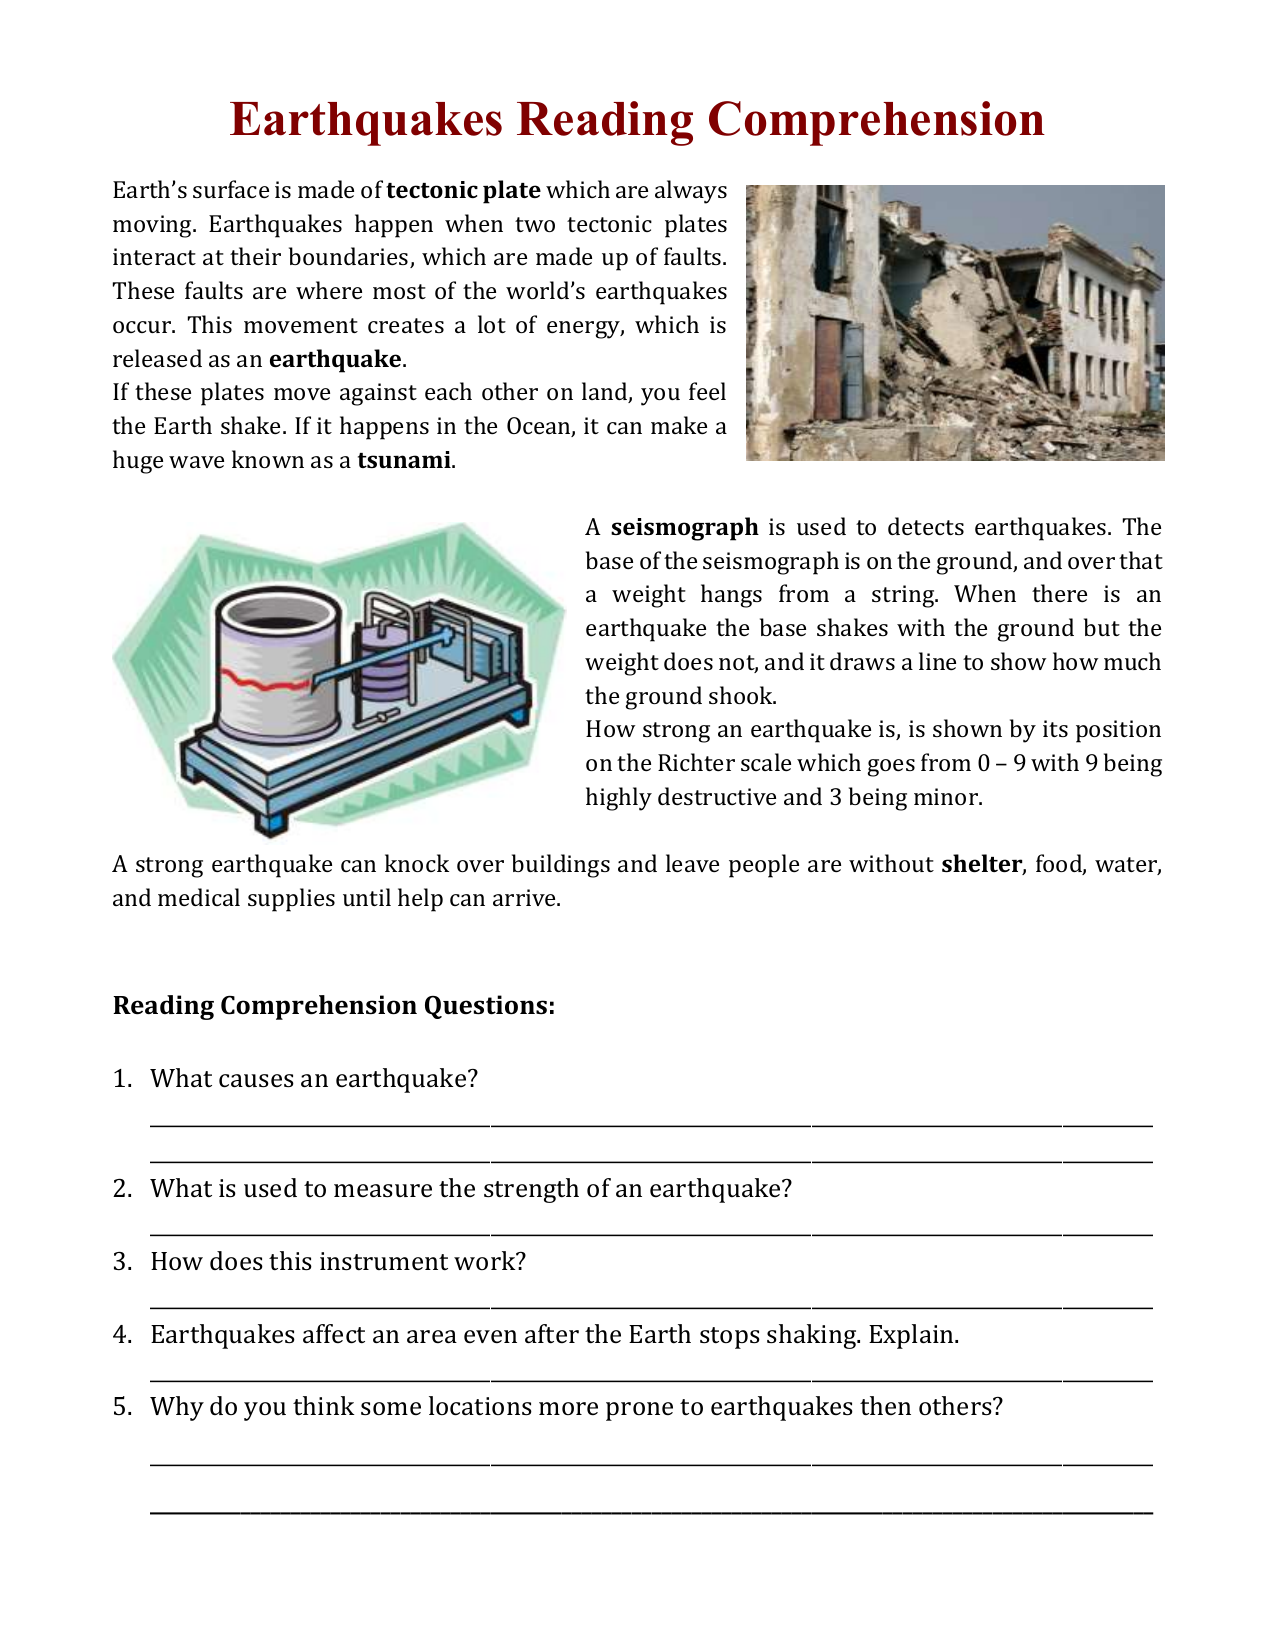 Homework help earthquakes